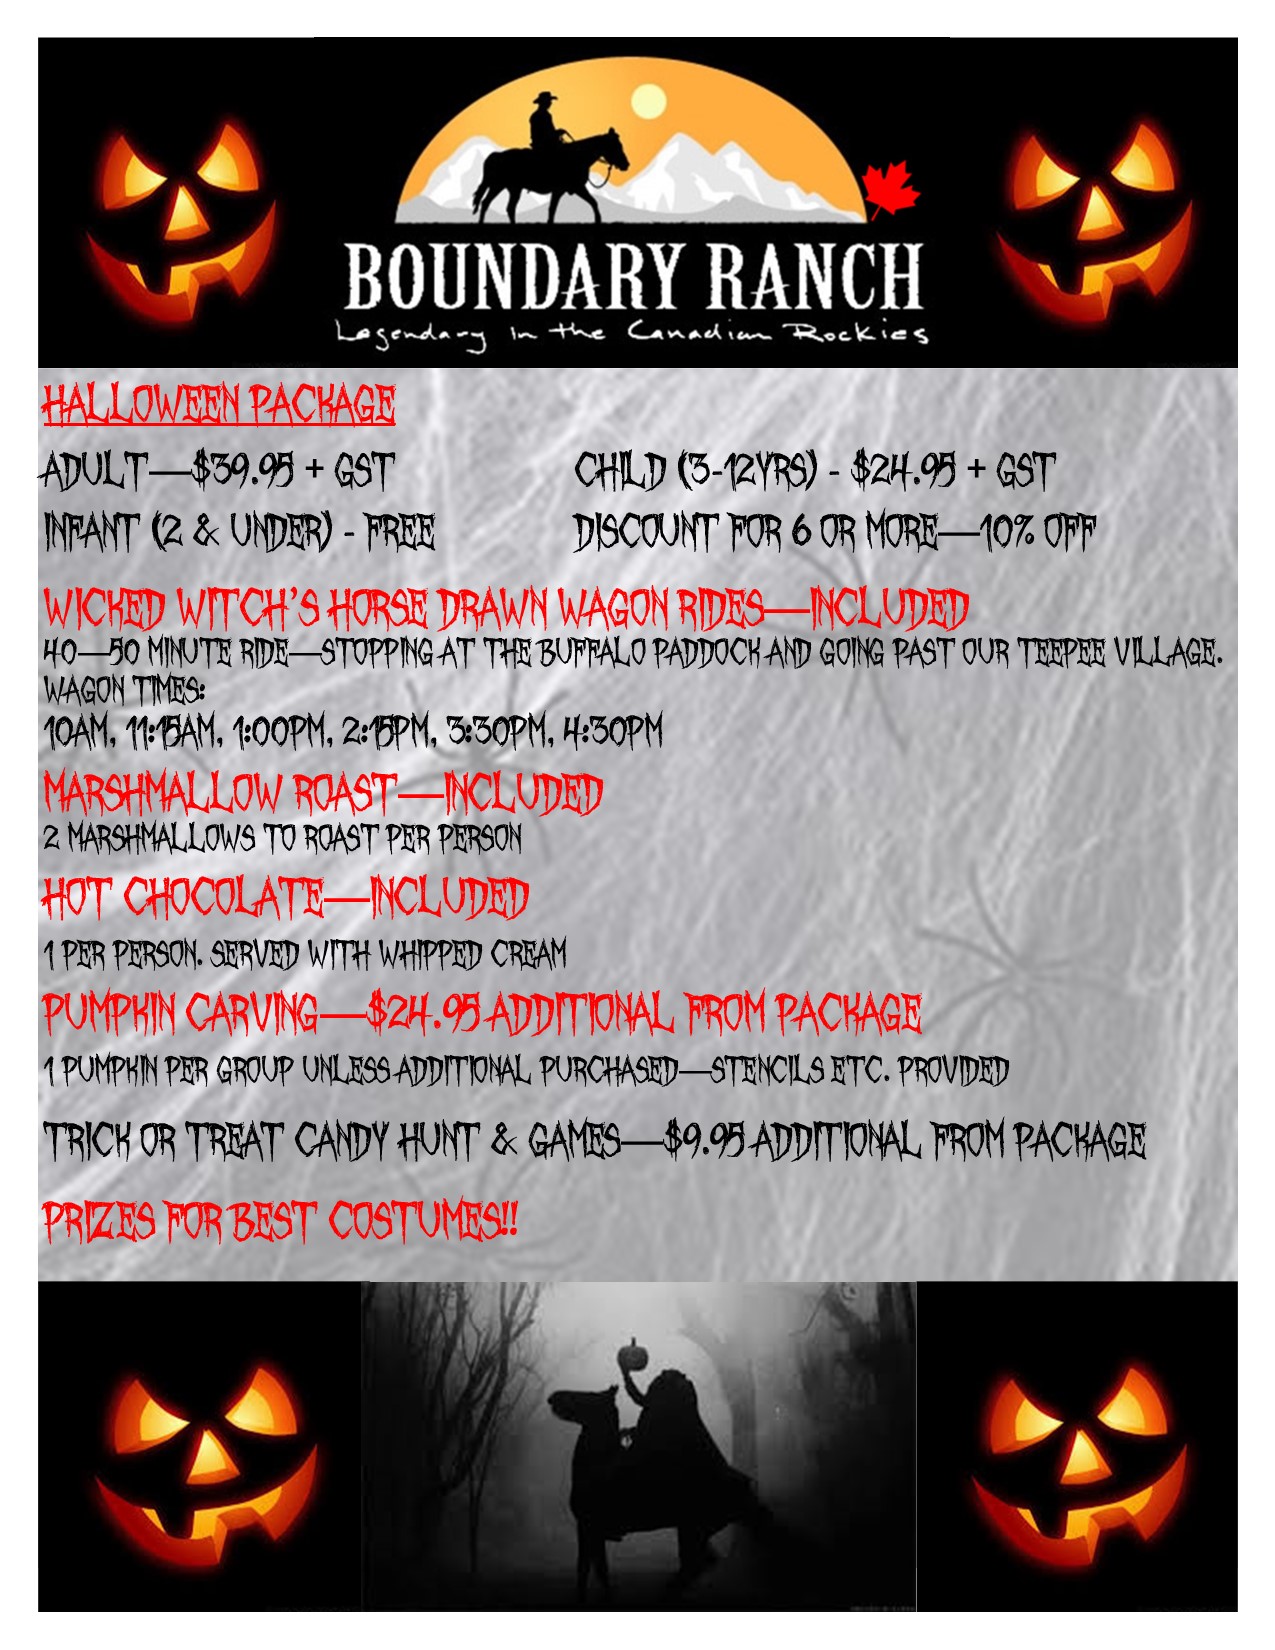 Boundary Ranch Halloween (Family Fun Calgary)